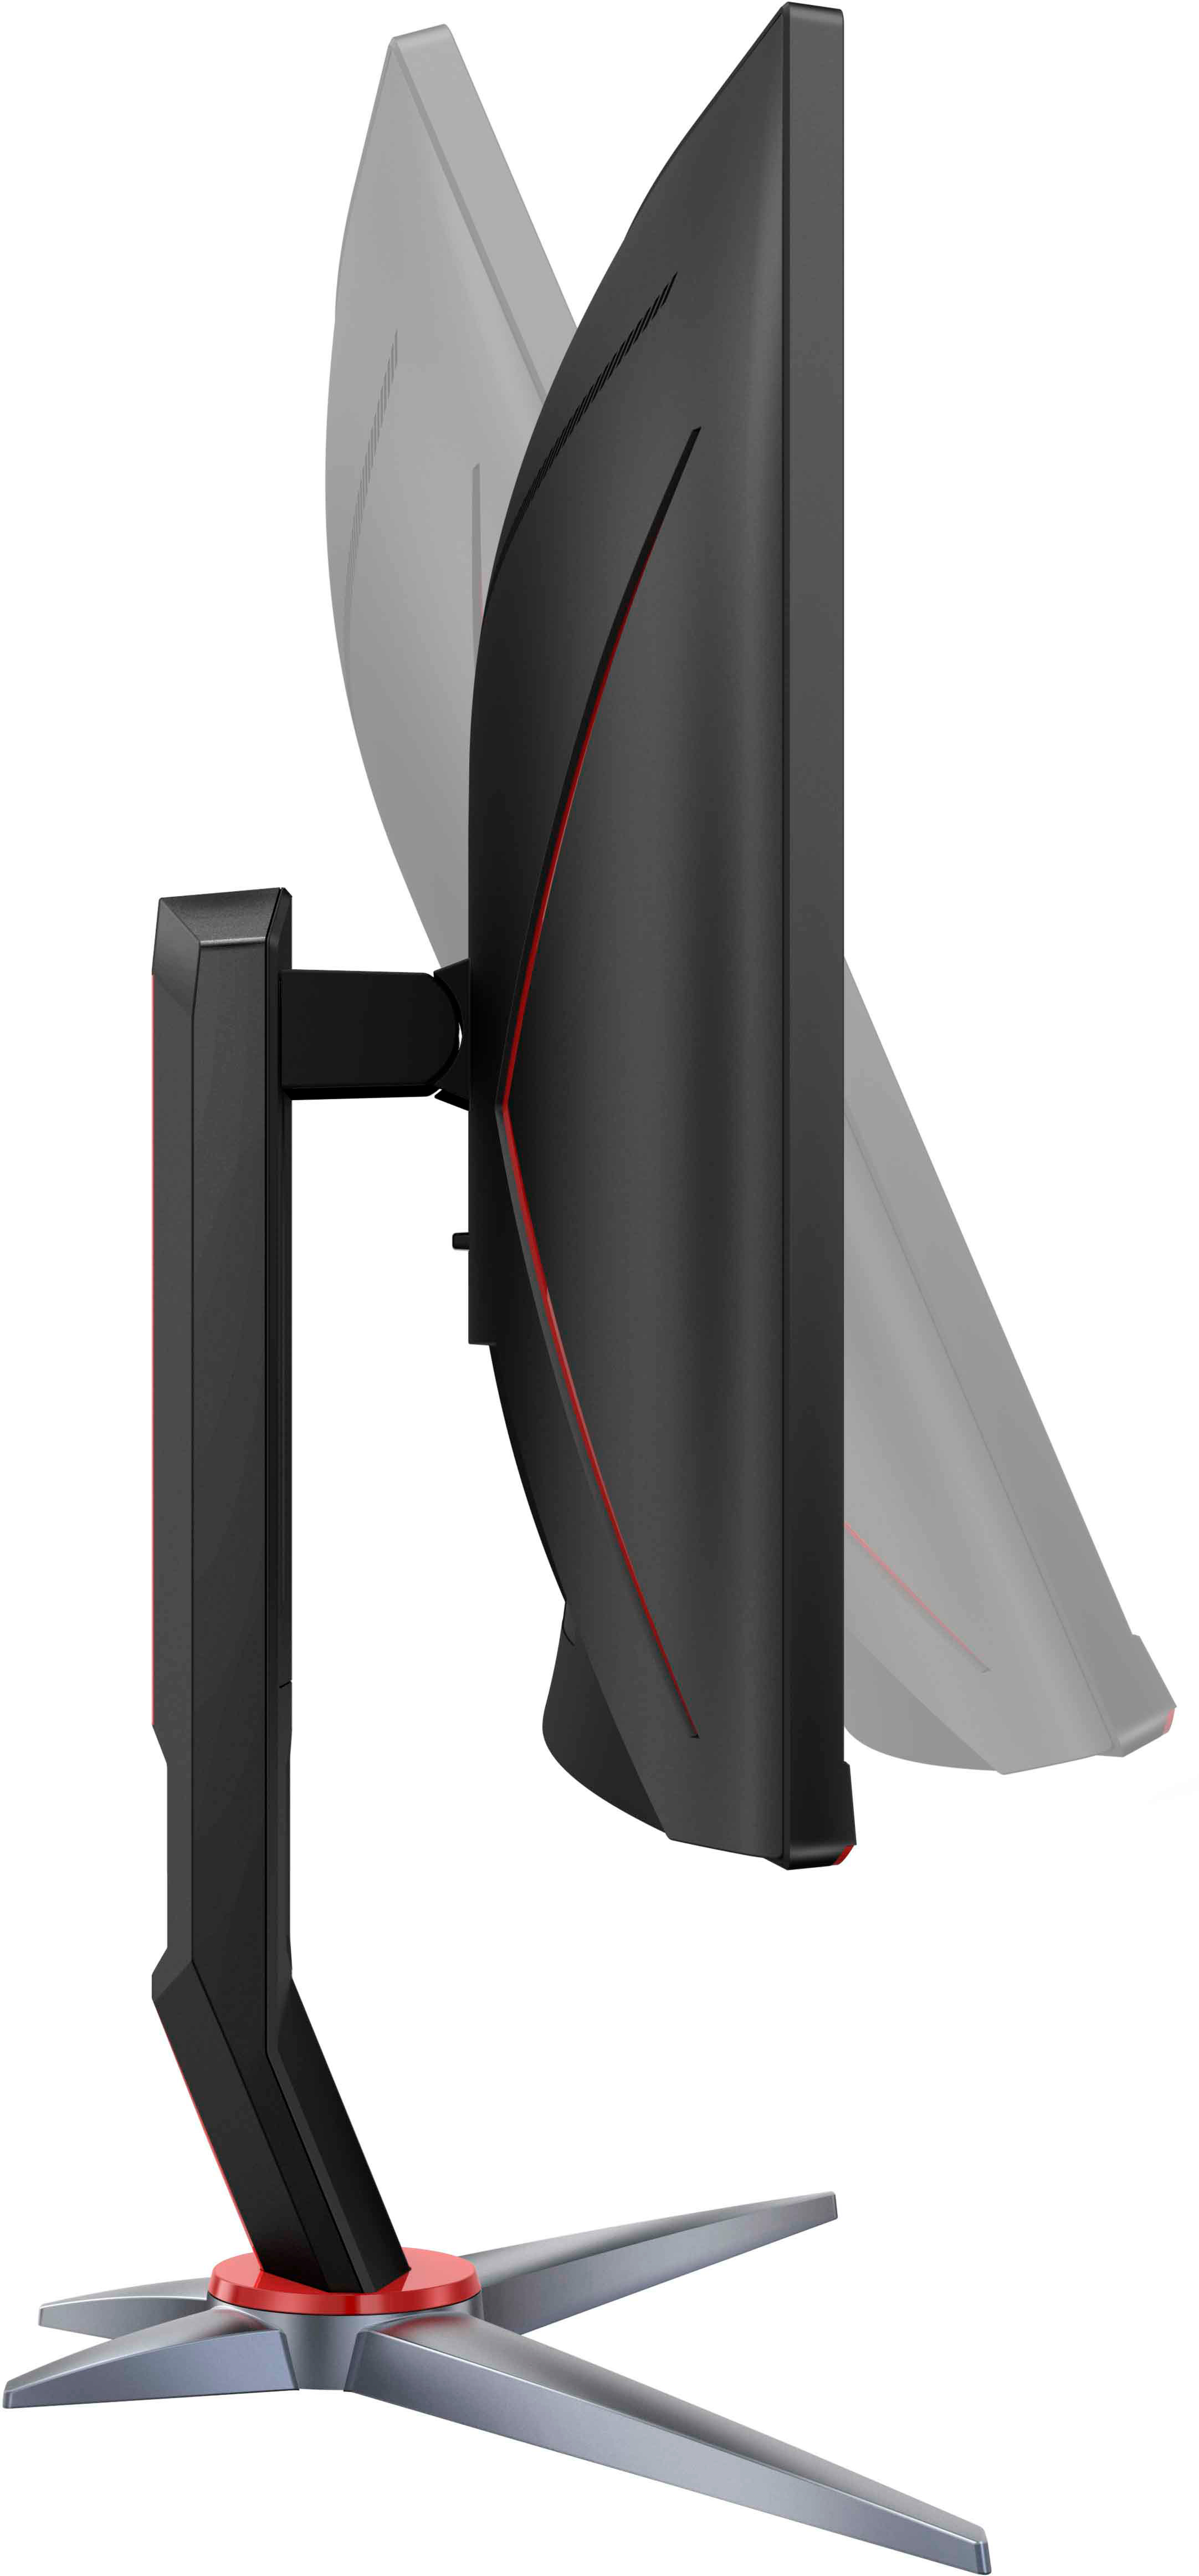 Aoc 31.5` QHD 1440p LED Curved Black Gaming monitor LED Display